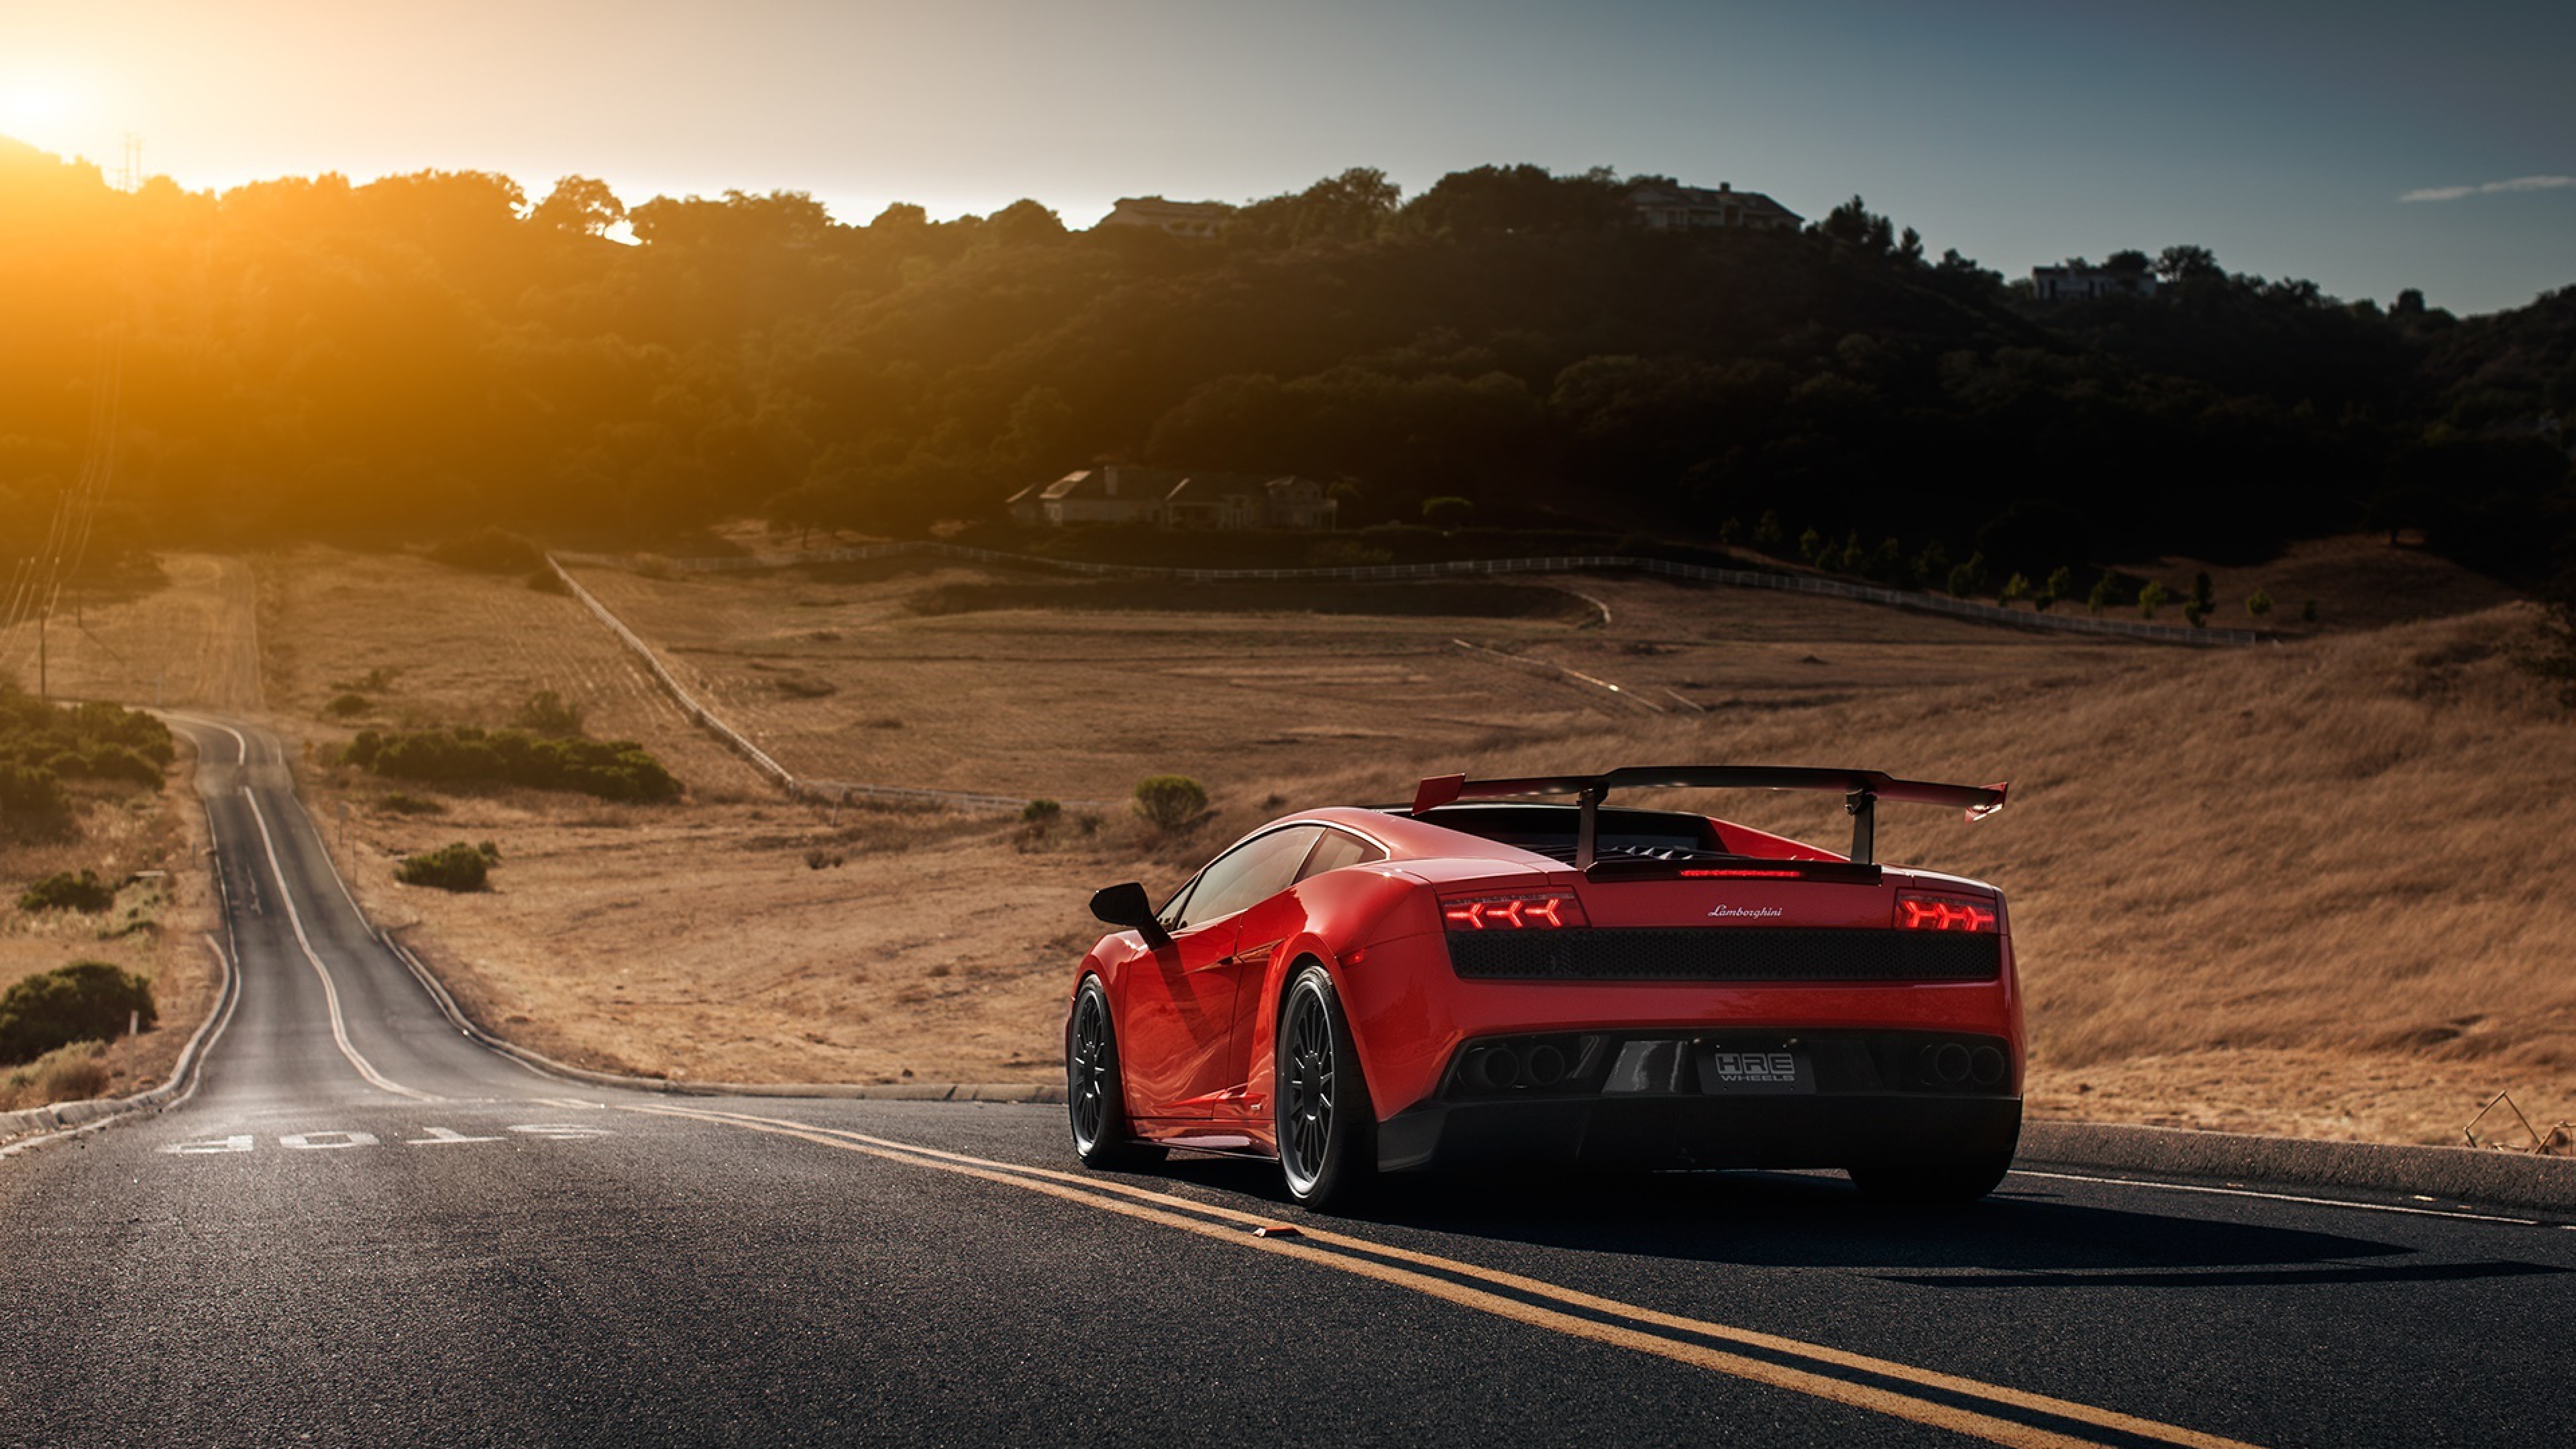 Lamborghini Gallardo, HD Cars, 4k Wallpapers, Images ...